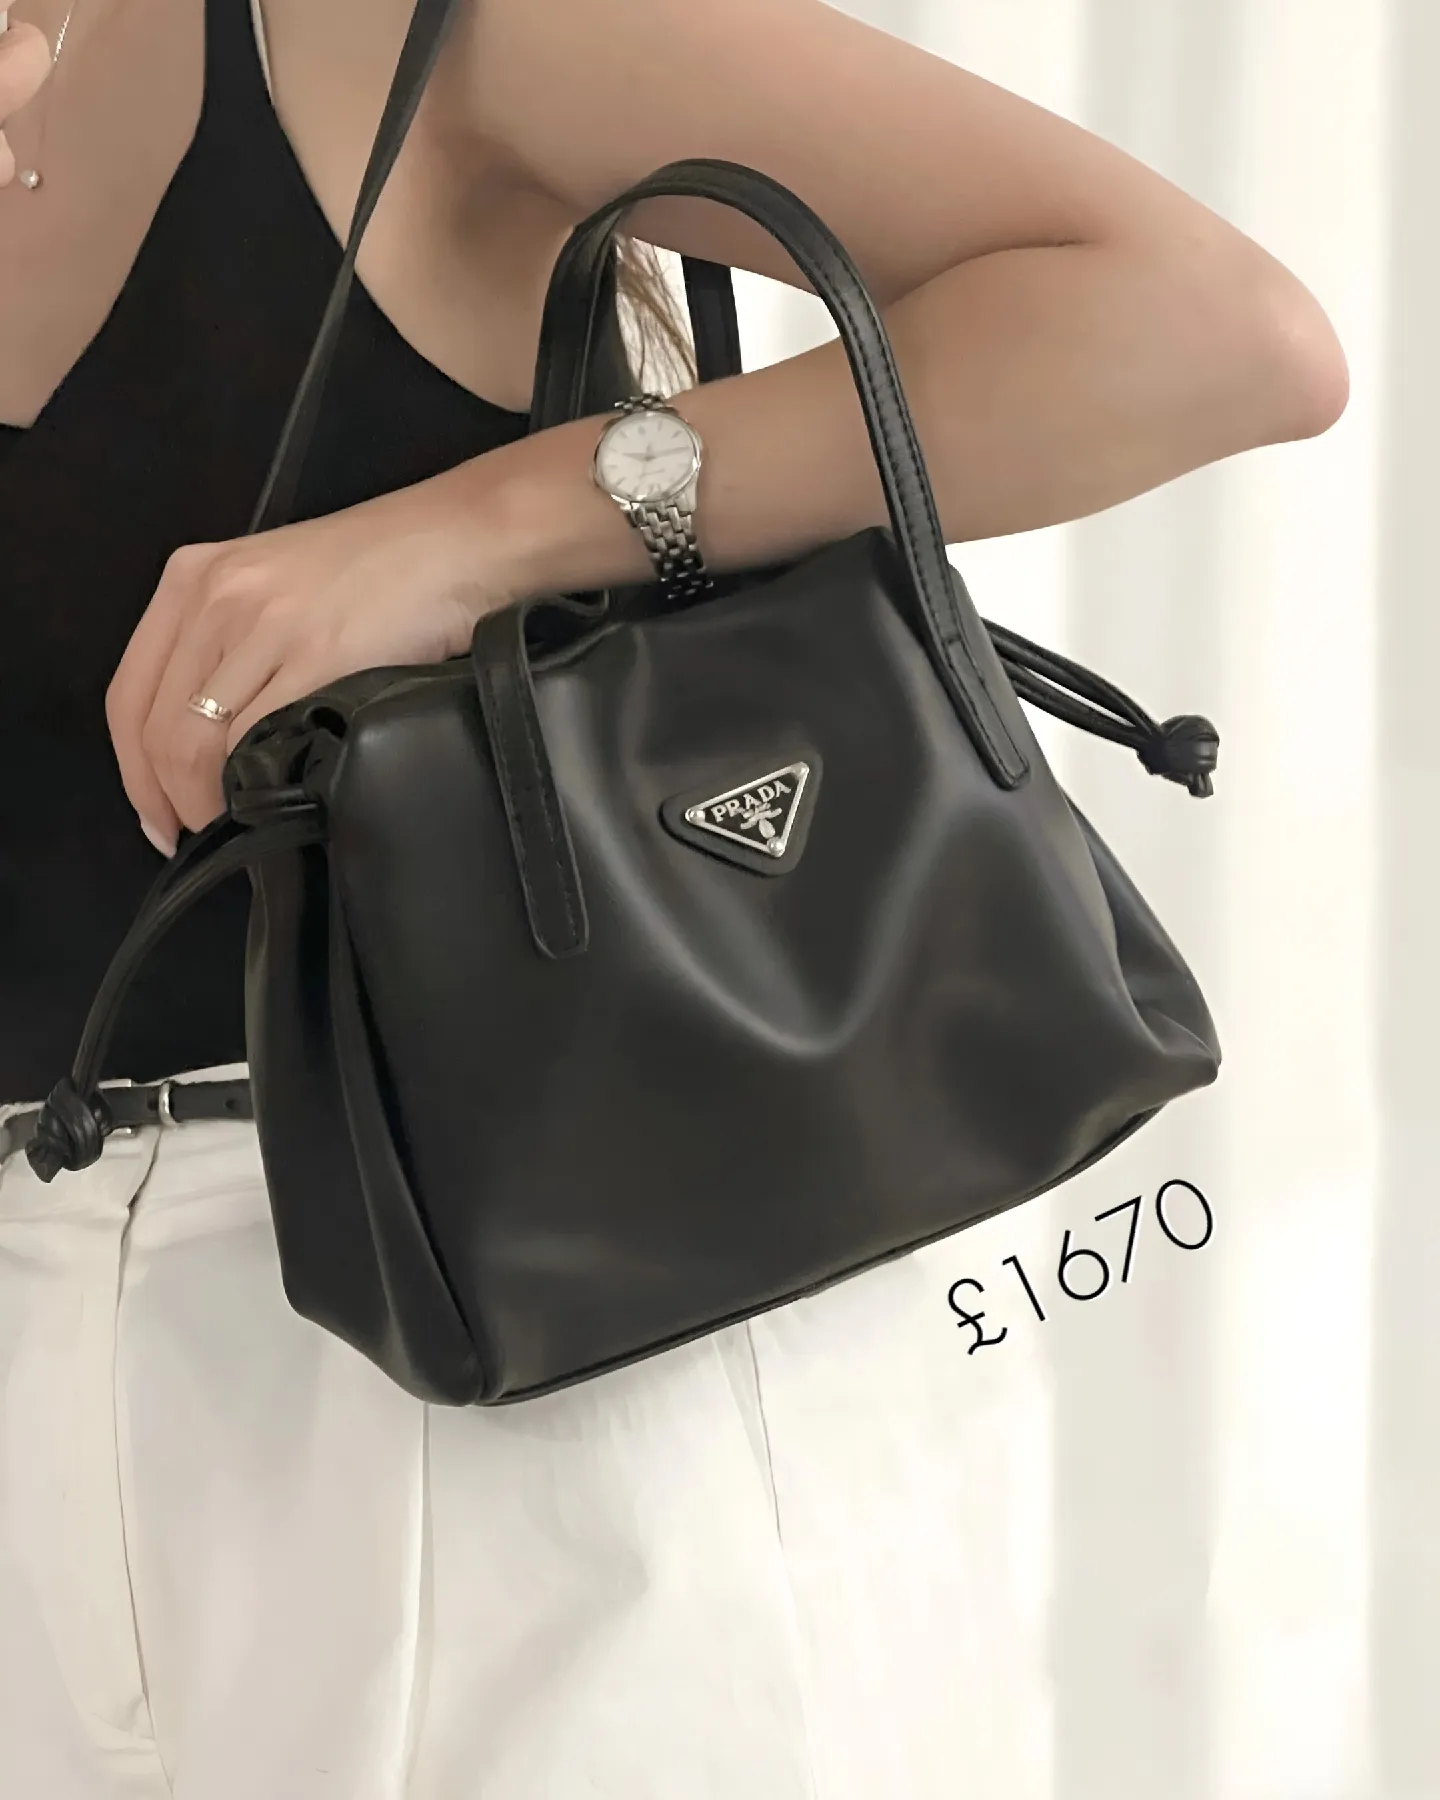 Prada Saffiano Leather Two-Way Top Handle Messenger Bag Blush